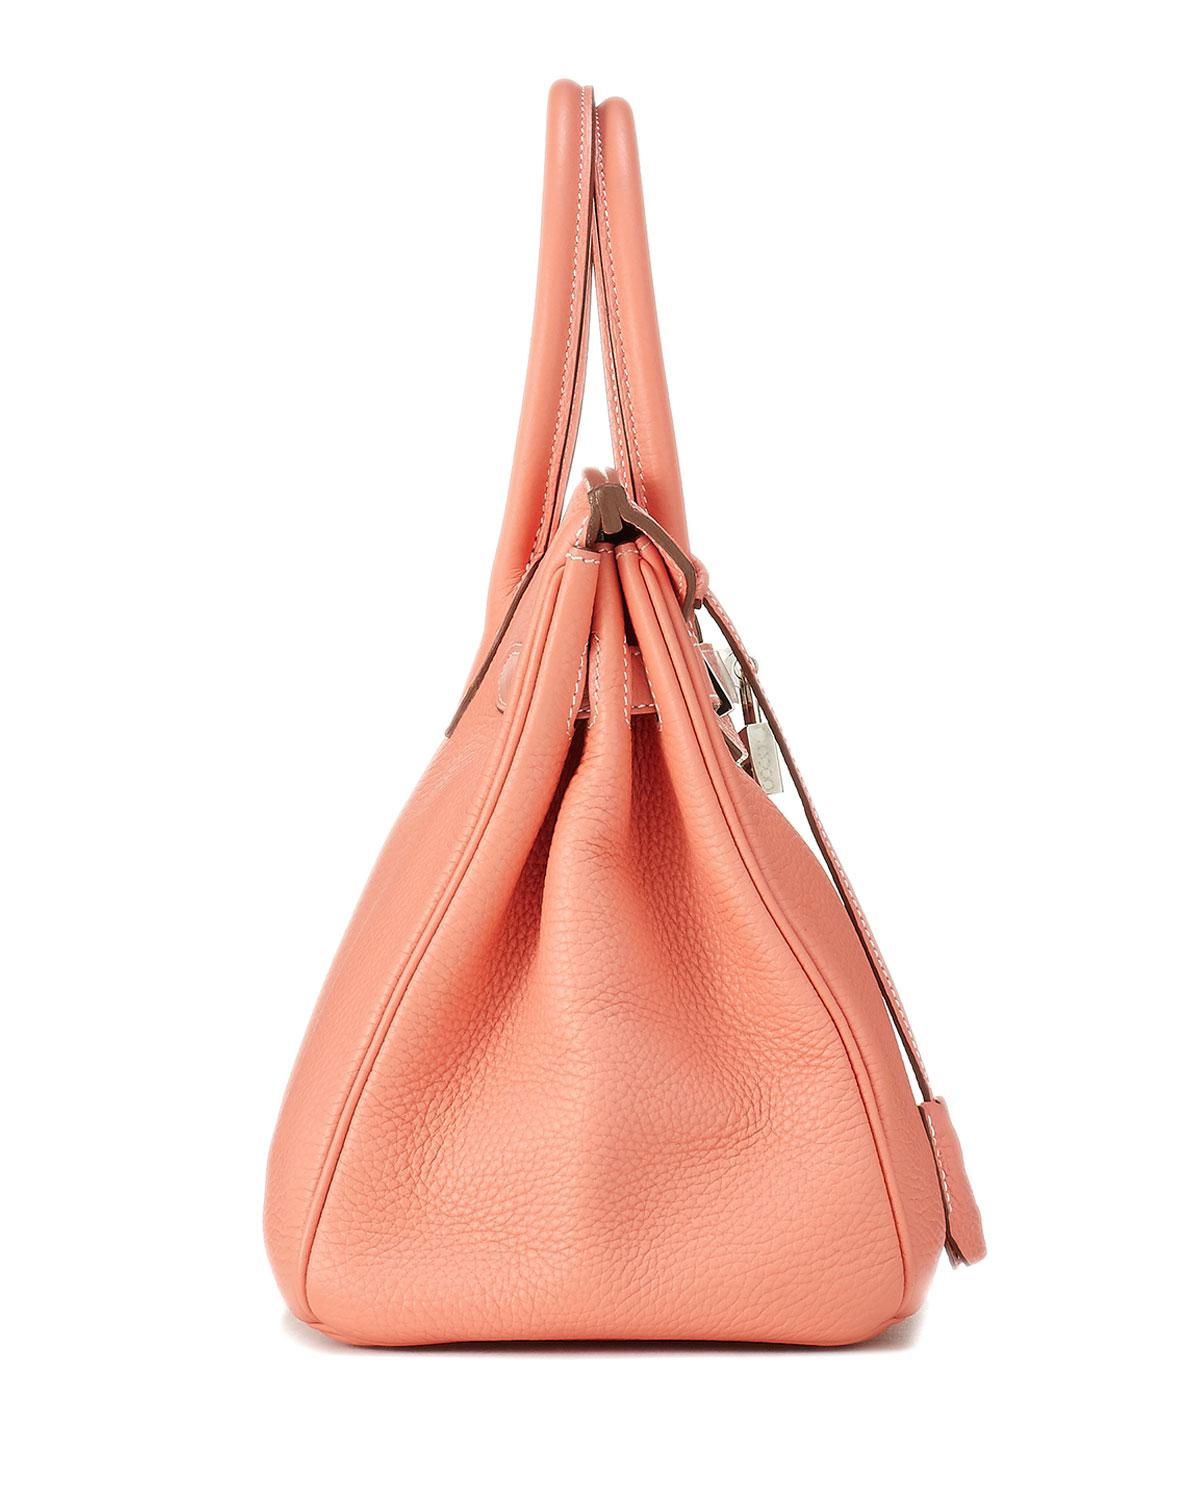 Hermès Leather Birkin 30 Calfskin Satchel Bag in Orange - Lyst